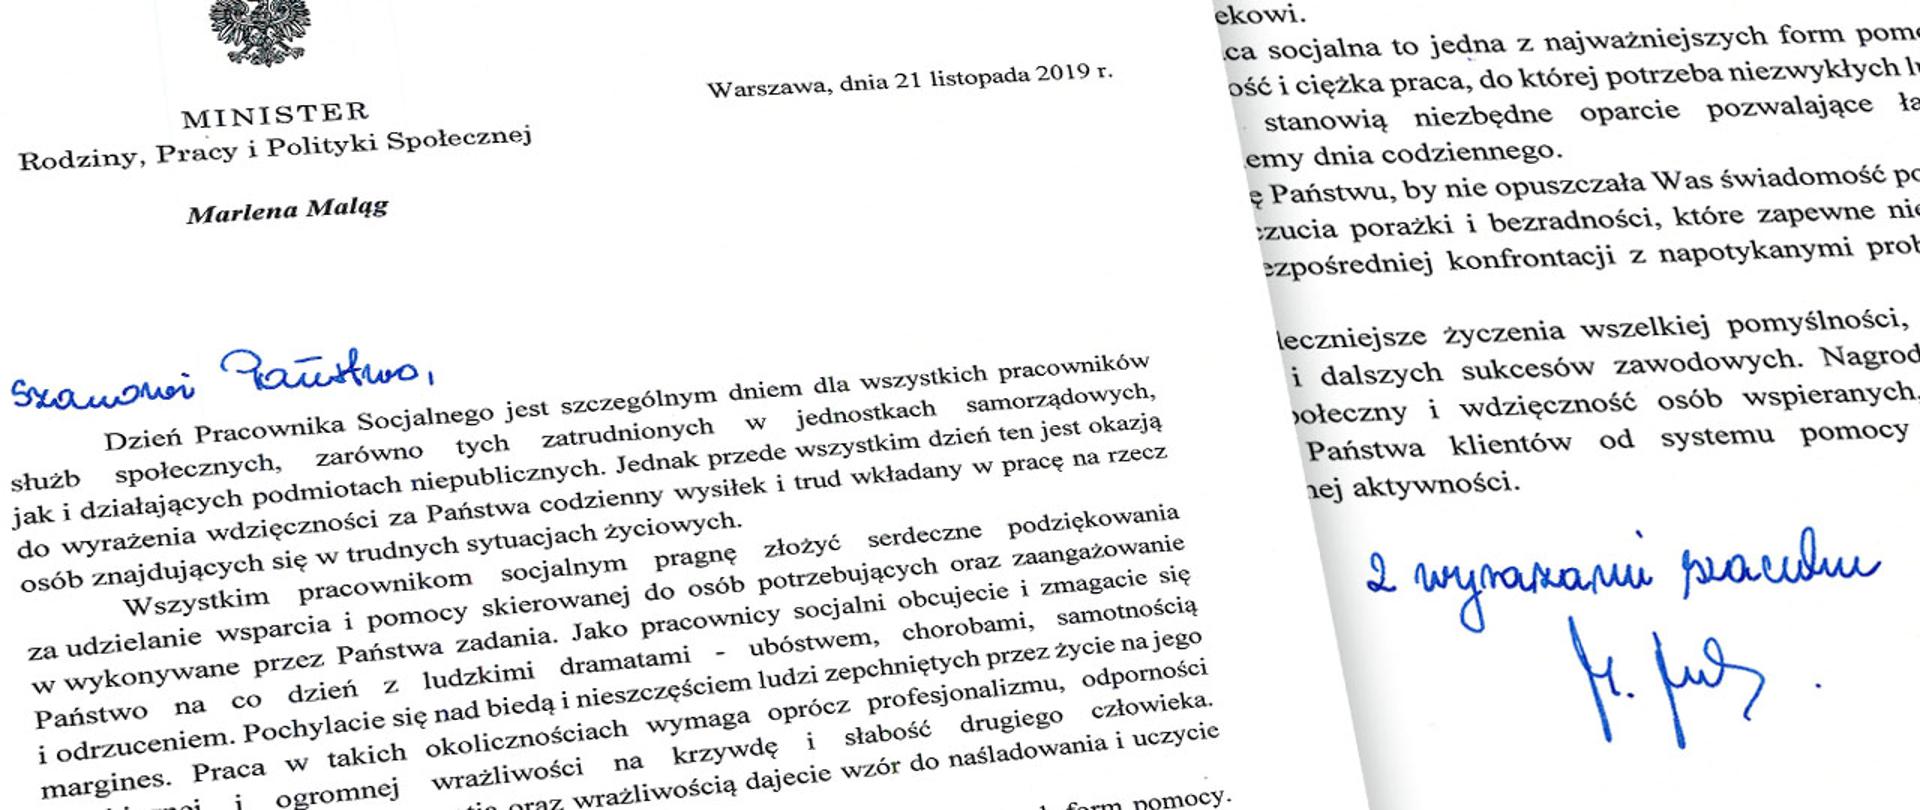 Fragment listu minister Marleny Maląg